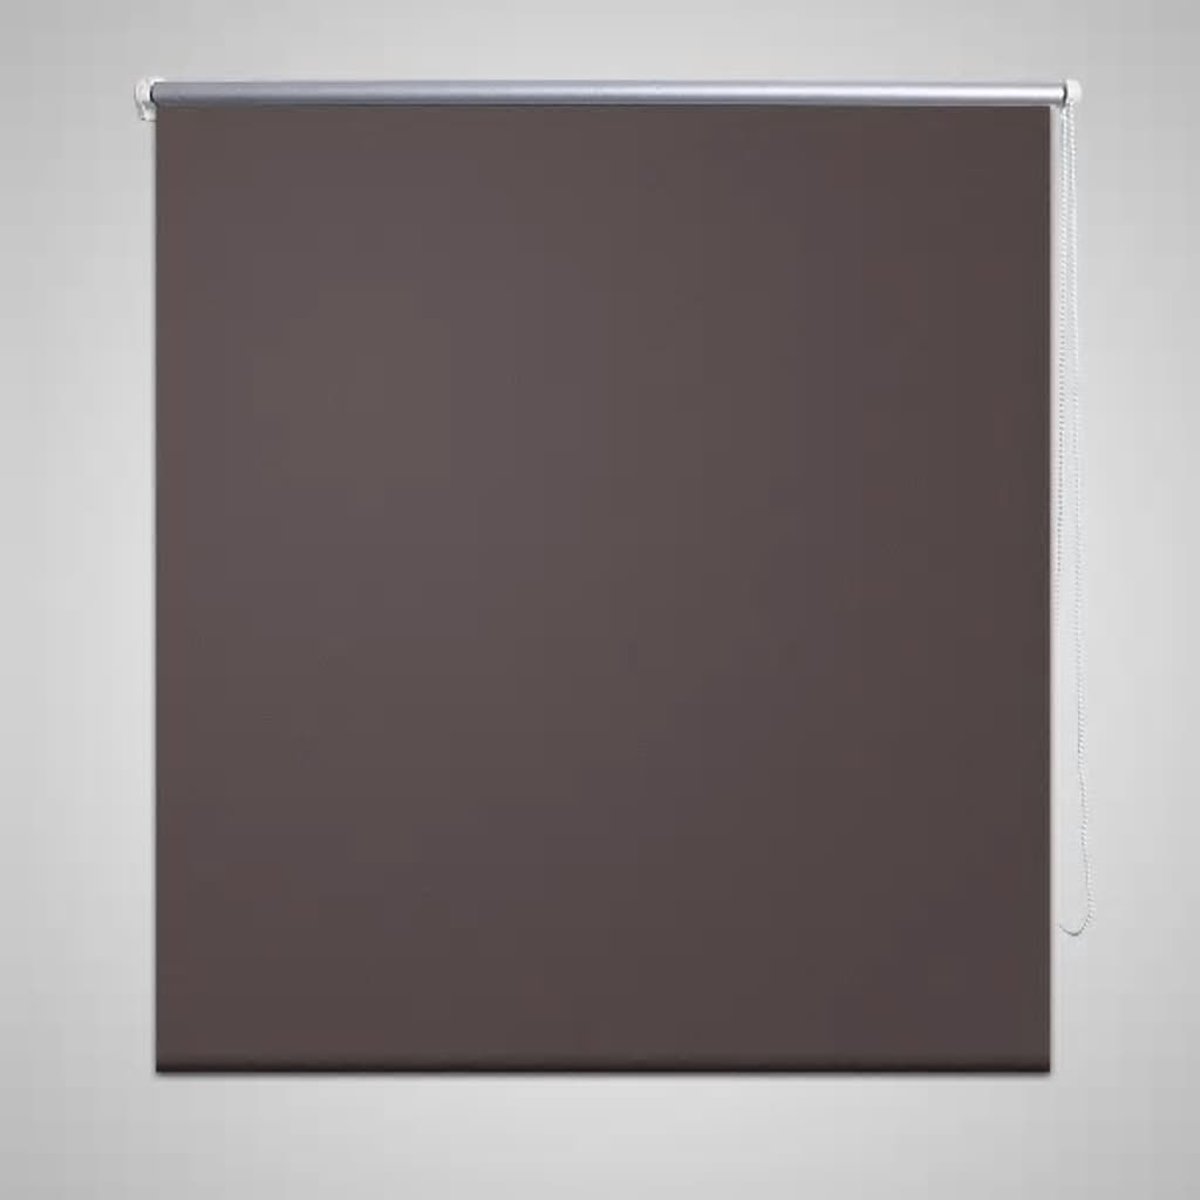 VidaLife Rolgordijn verduisterend 100 x 175 cm koffiebruin